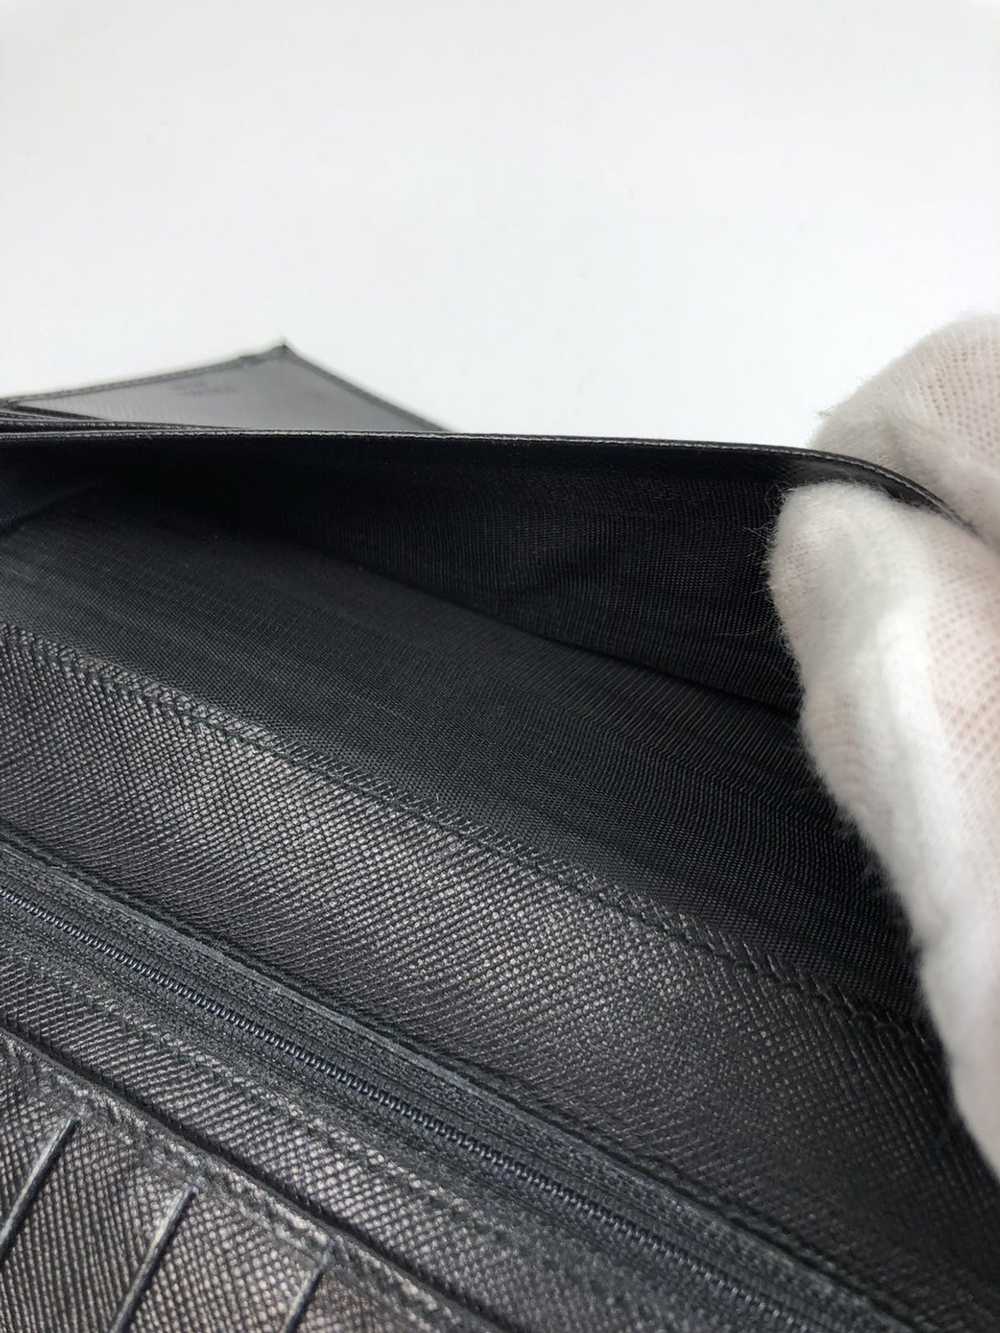 Prada Prada tessuto nero leather long wallet - image 5